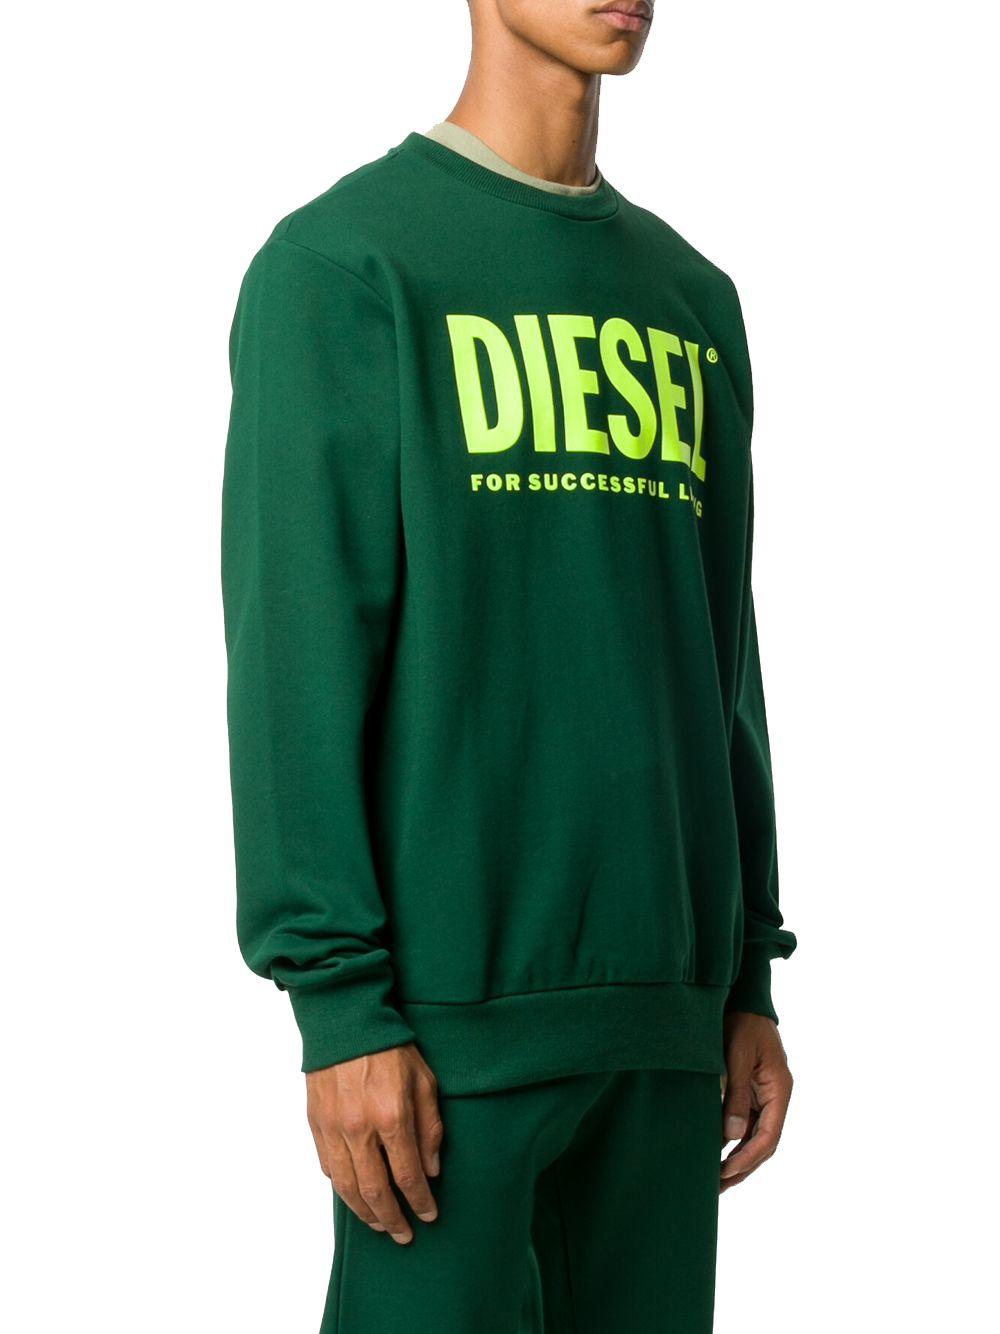 DIESEL Cotton Sweatshirt in Green for Men - Lyst